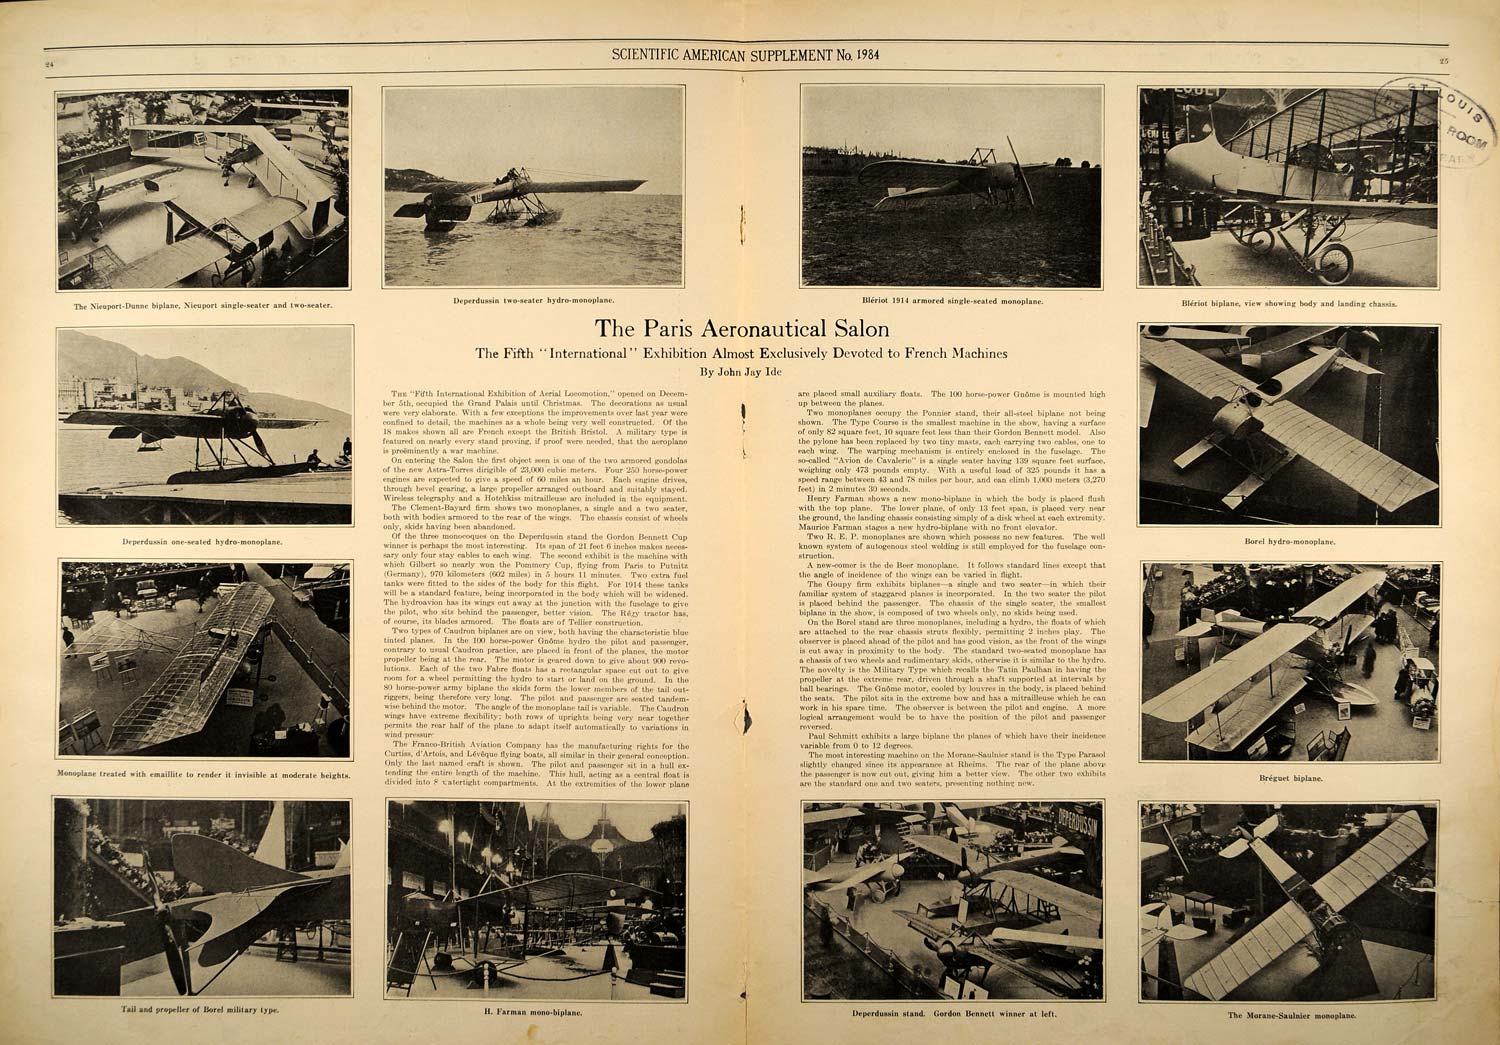 1914 Print French Airplanes Deperdussin Bleriot Breguet ORIGINAL HISTORIC SA1A